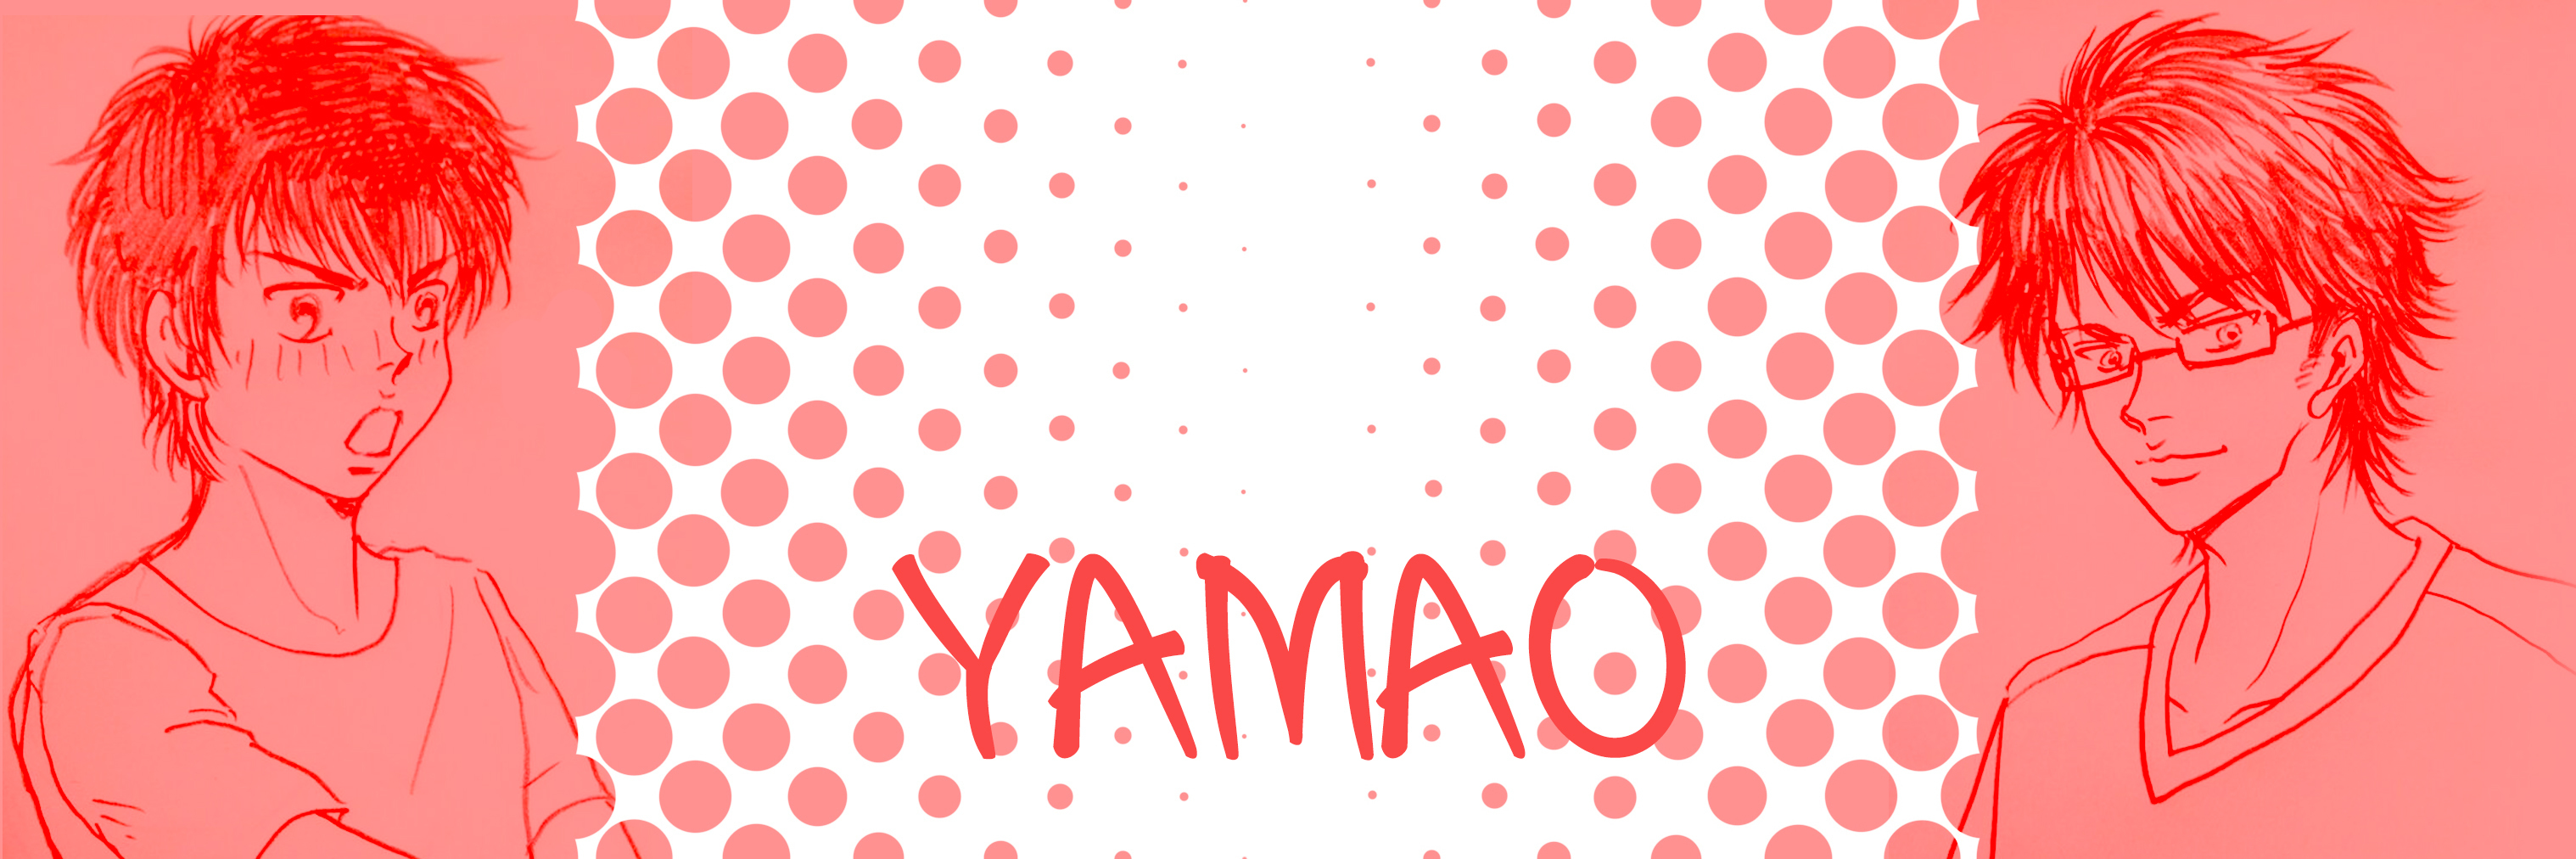 yamao